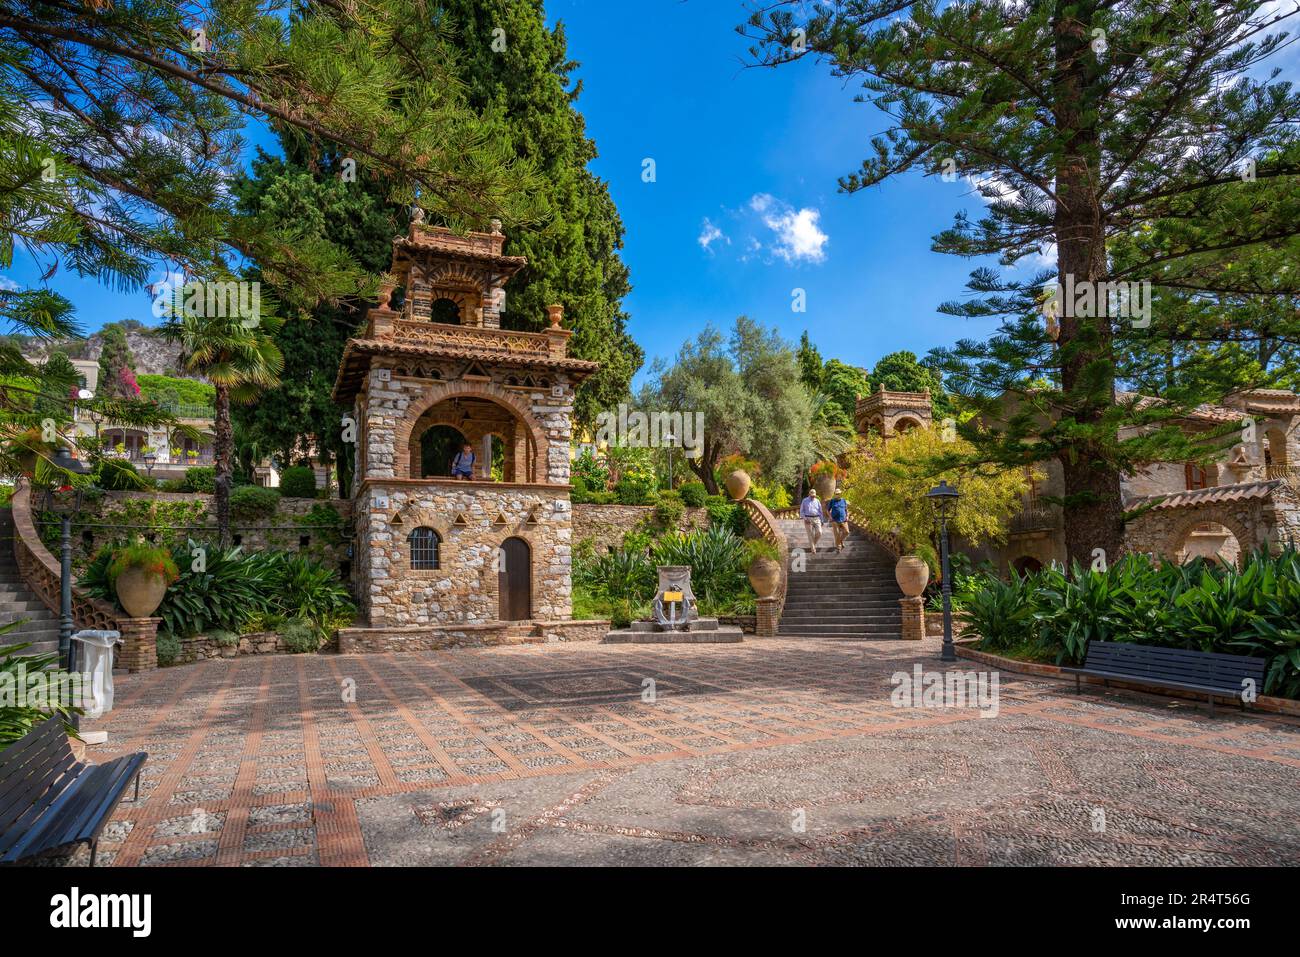 View of Villa Comunale di Taormina public gardens, Taormina, Sicily, Italy, Europe Stock Photo